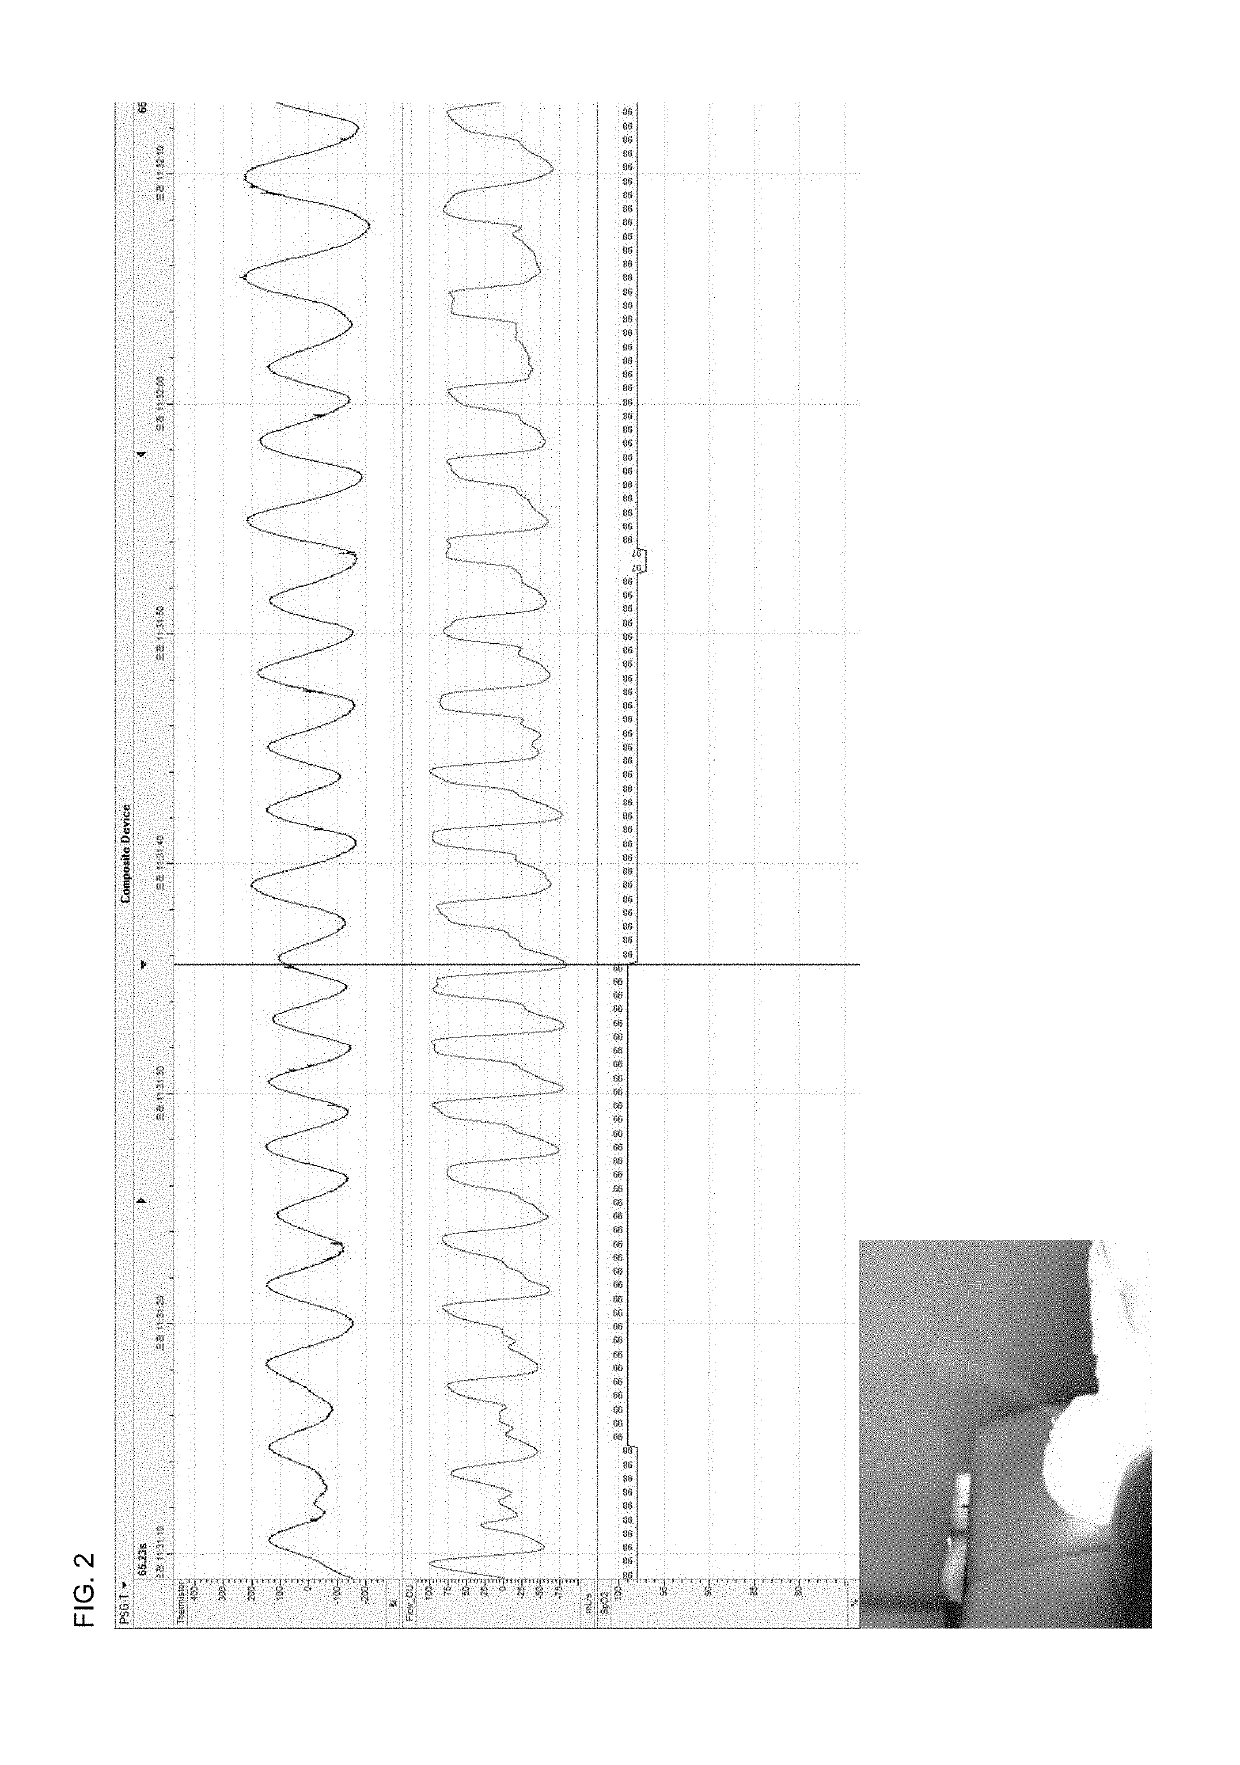 Breath analysis system using gas image detection method